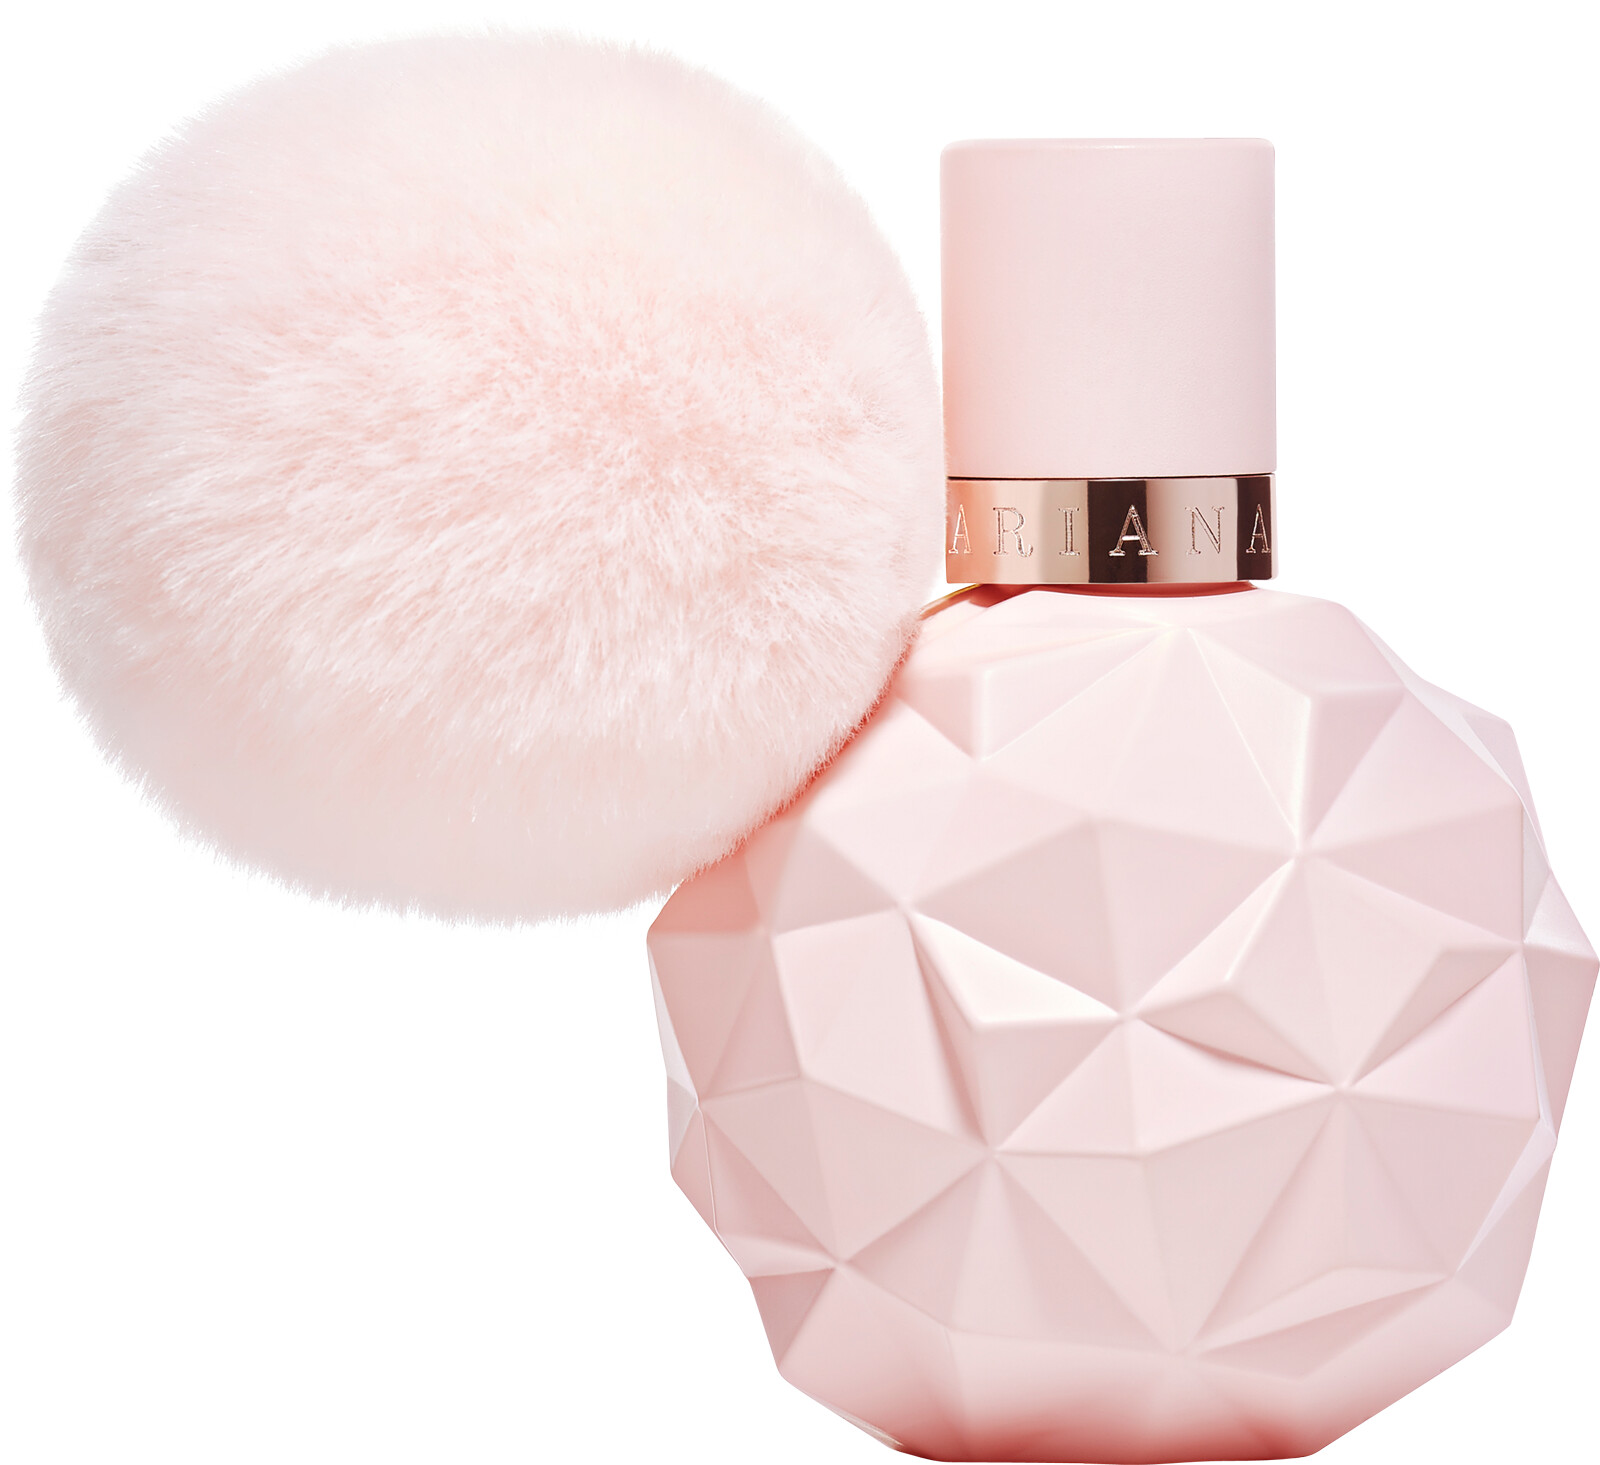 Ariana Grande Sweet Like Candy Eau de Parfum Spray 30ml